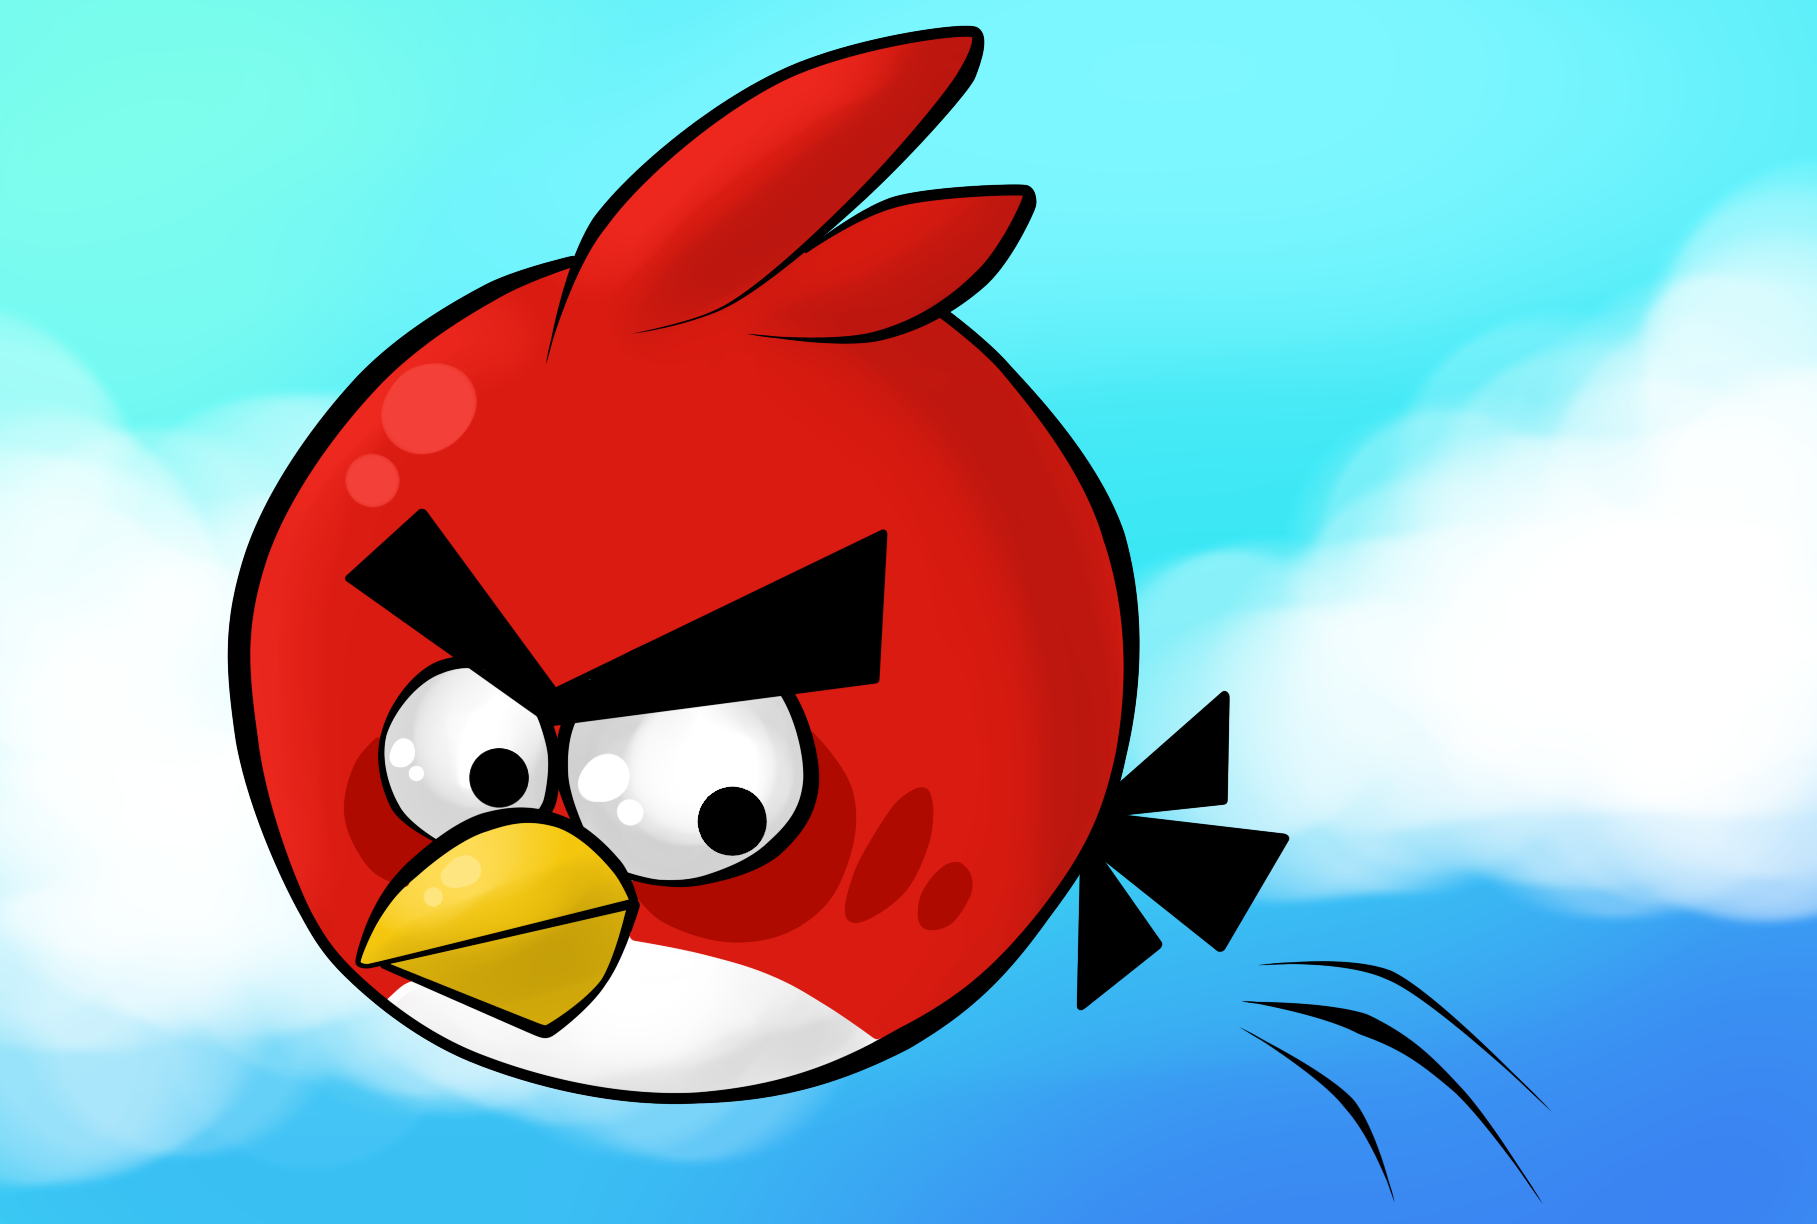 Angry Birds HD Wallpaper Image for Desktop - Cartoons Wallpapers